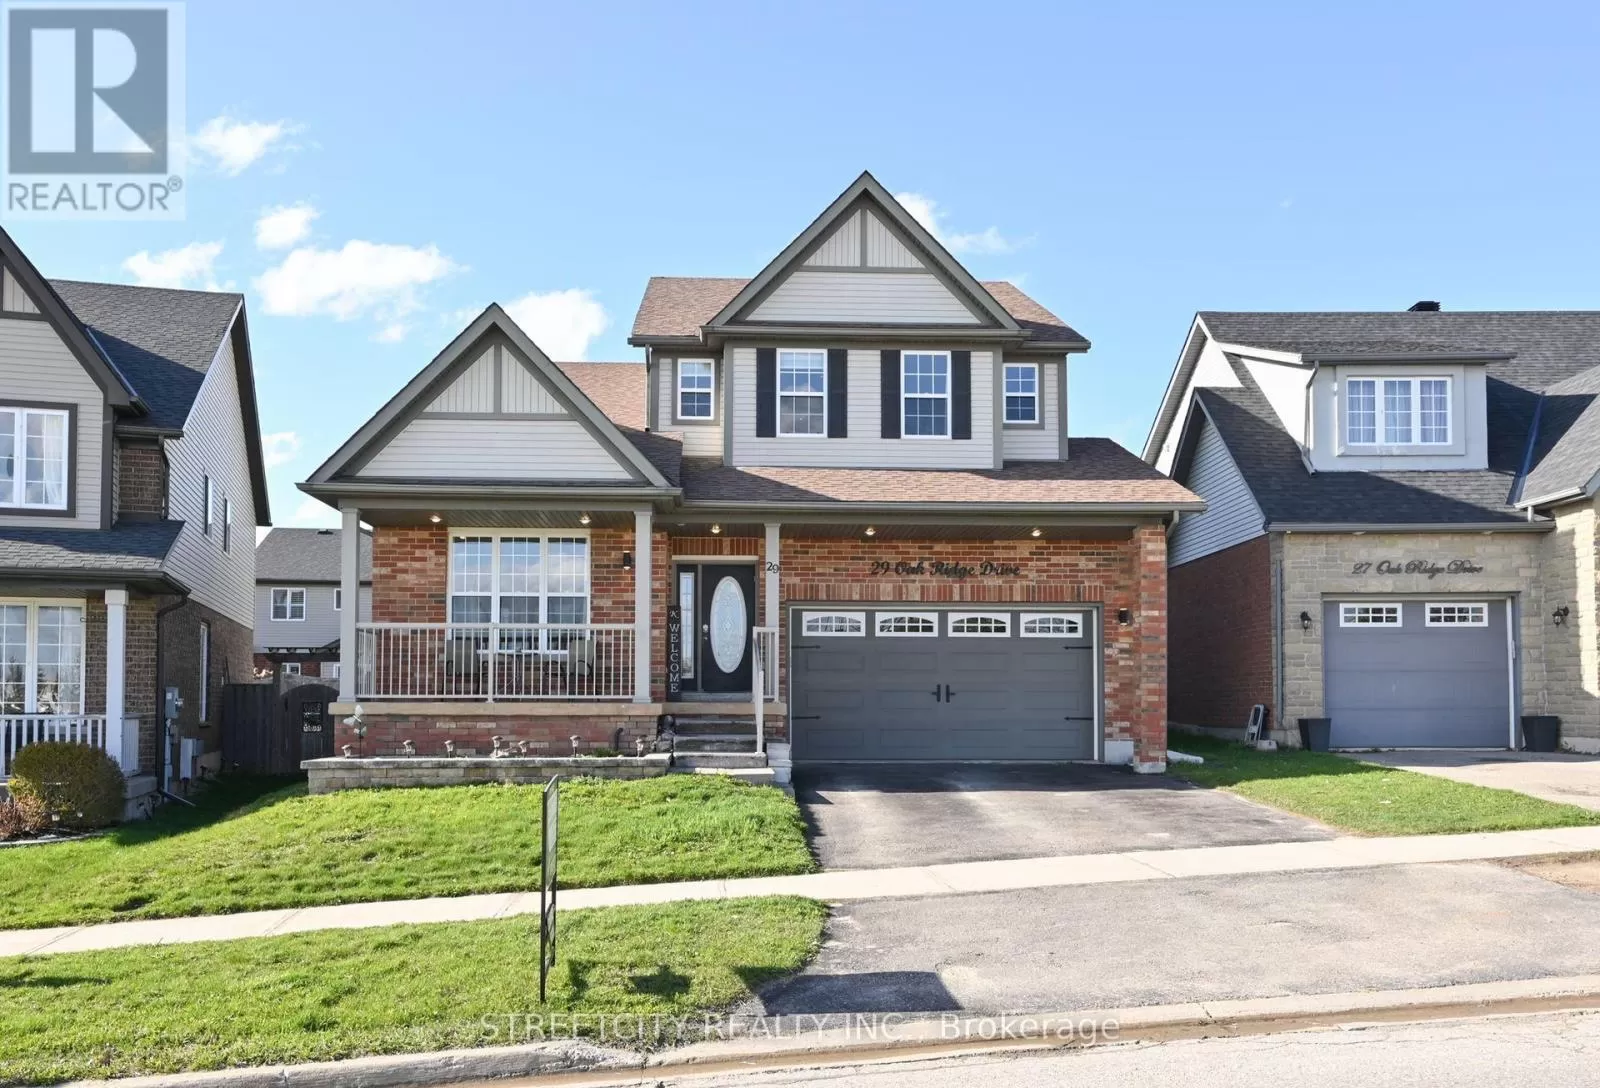 House for rent: 29 Oak Ridge Dr, Orangeville, Ontario L9W 5J6